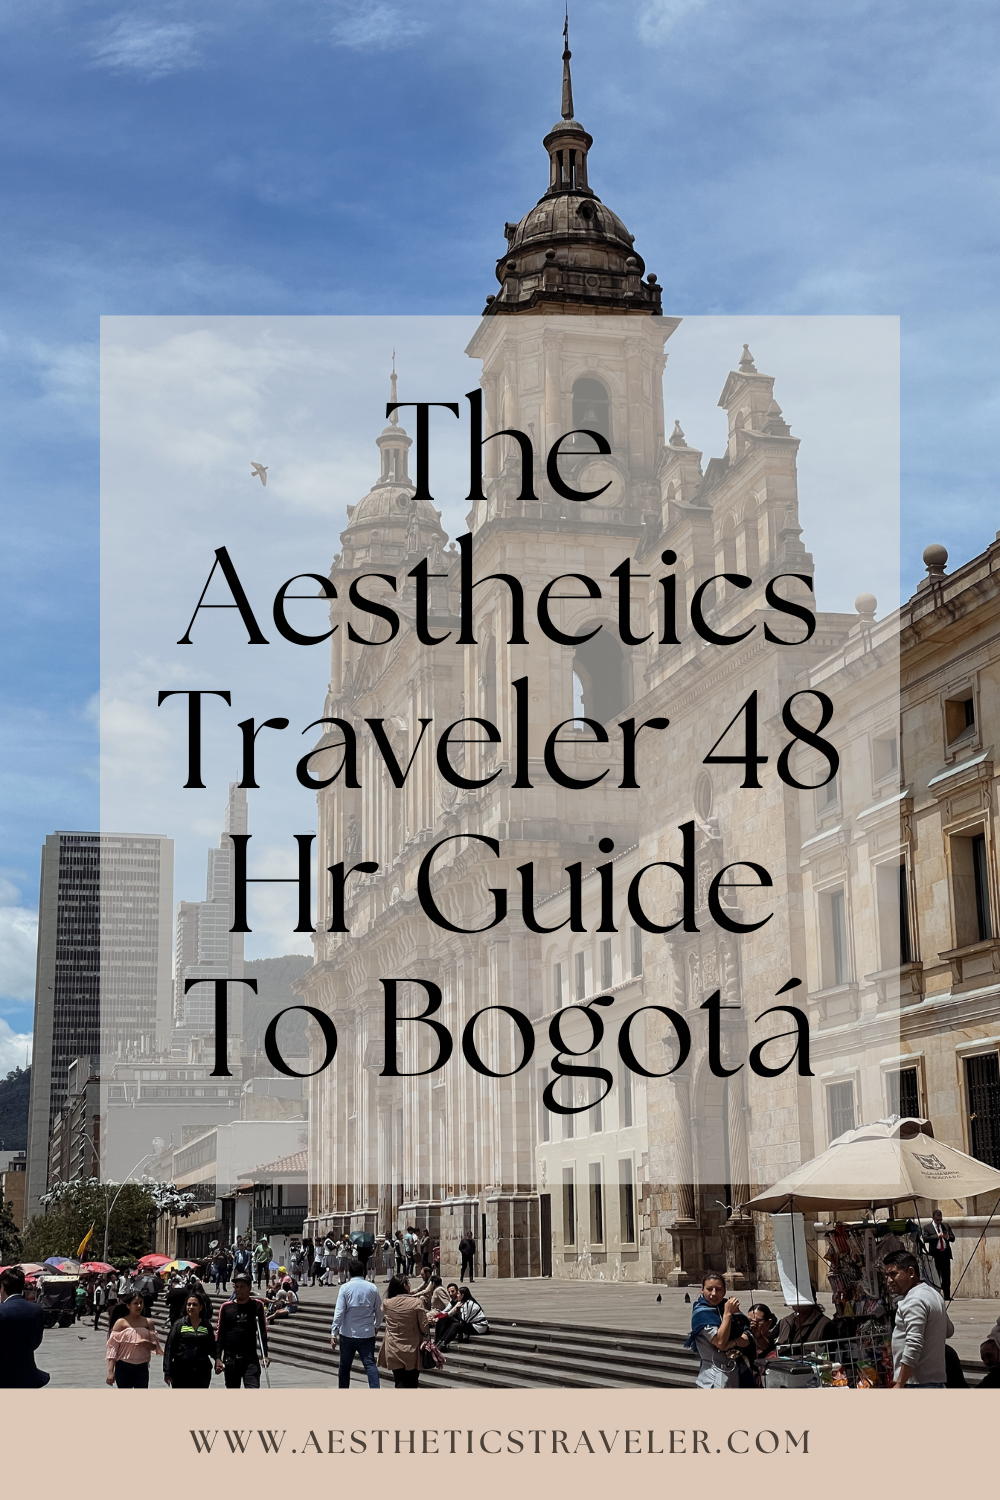 Aesthetics Traveler 48 Hour Guide To Bogotá, Colombia | www.aestheticstraveler.com Luxury Travel & Lifestyle Editorial